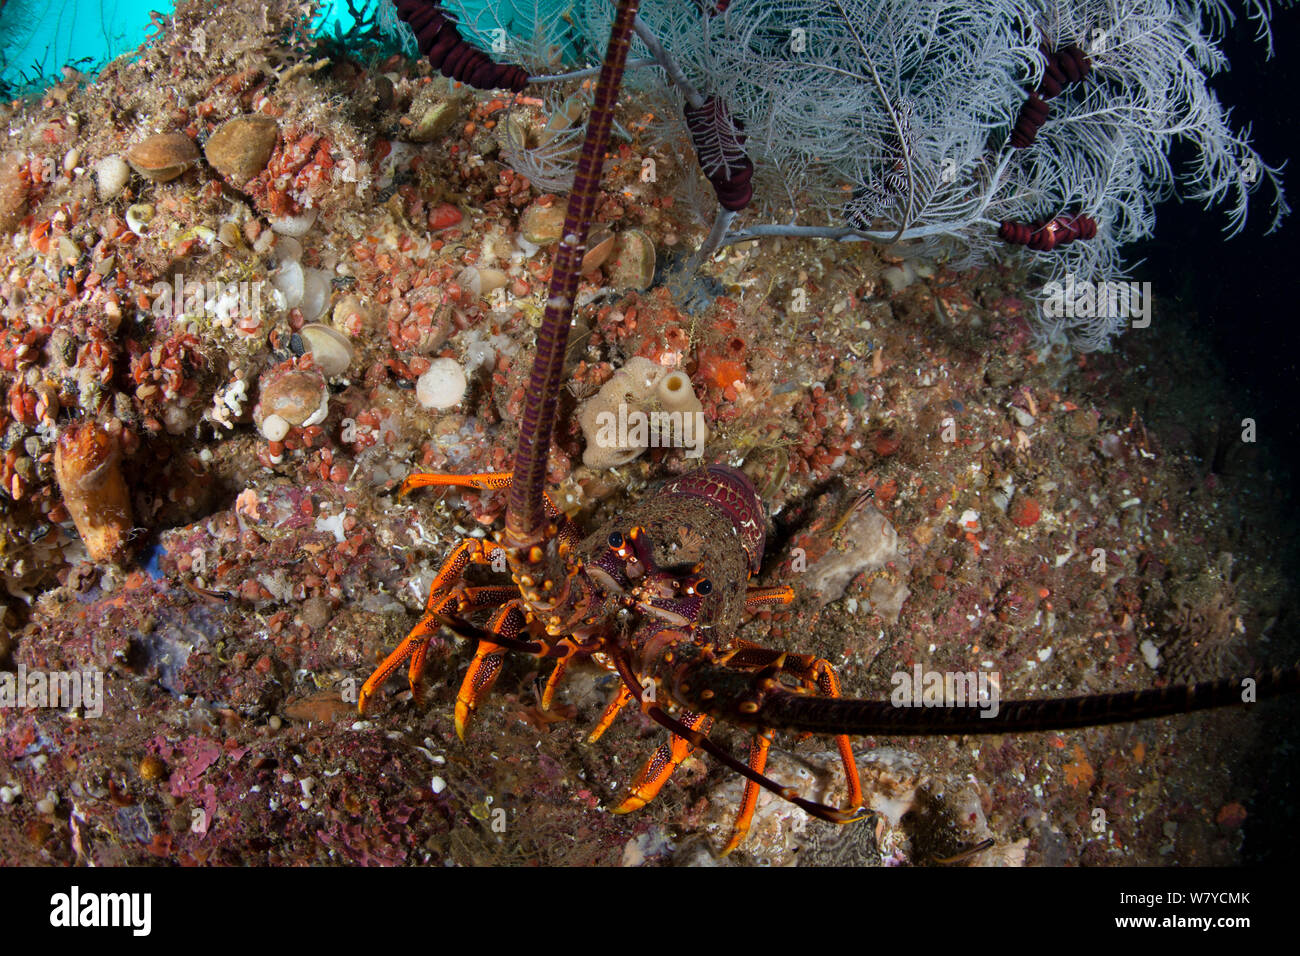 Neuseeland Krebse oder Southern Rock Lobster (Jasus edwardsii) versteckt sich unter einem Fiordland Black Coral Tree (Antipathella fiordensis) in den Dusky Sound, Fiordland National Park, Neuseeland. April 2014. Stockfoto